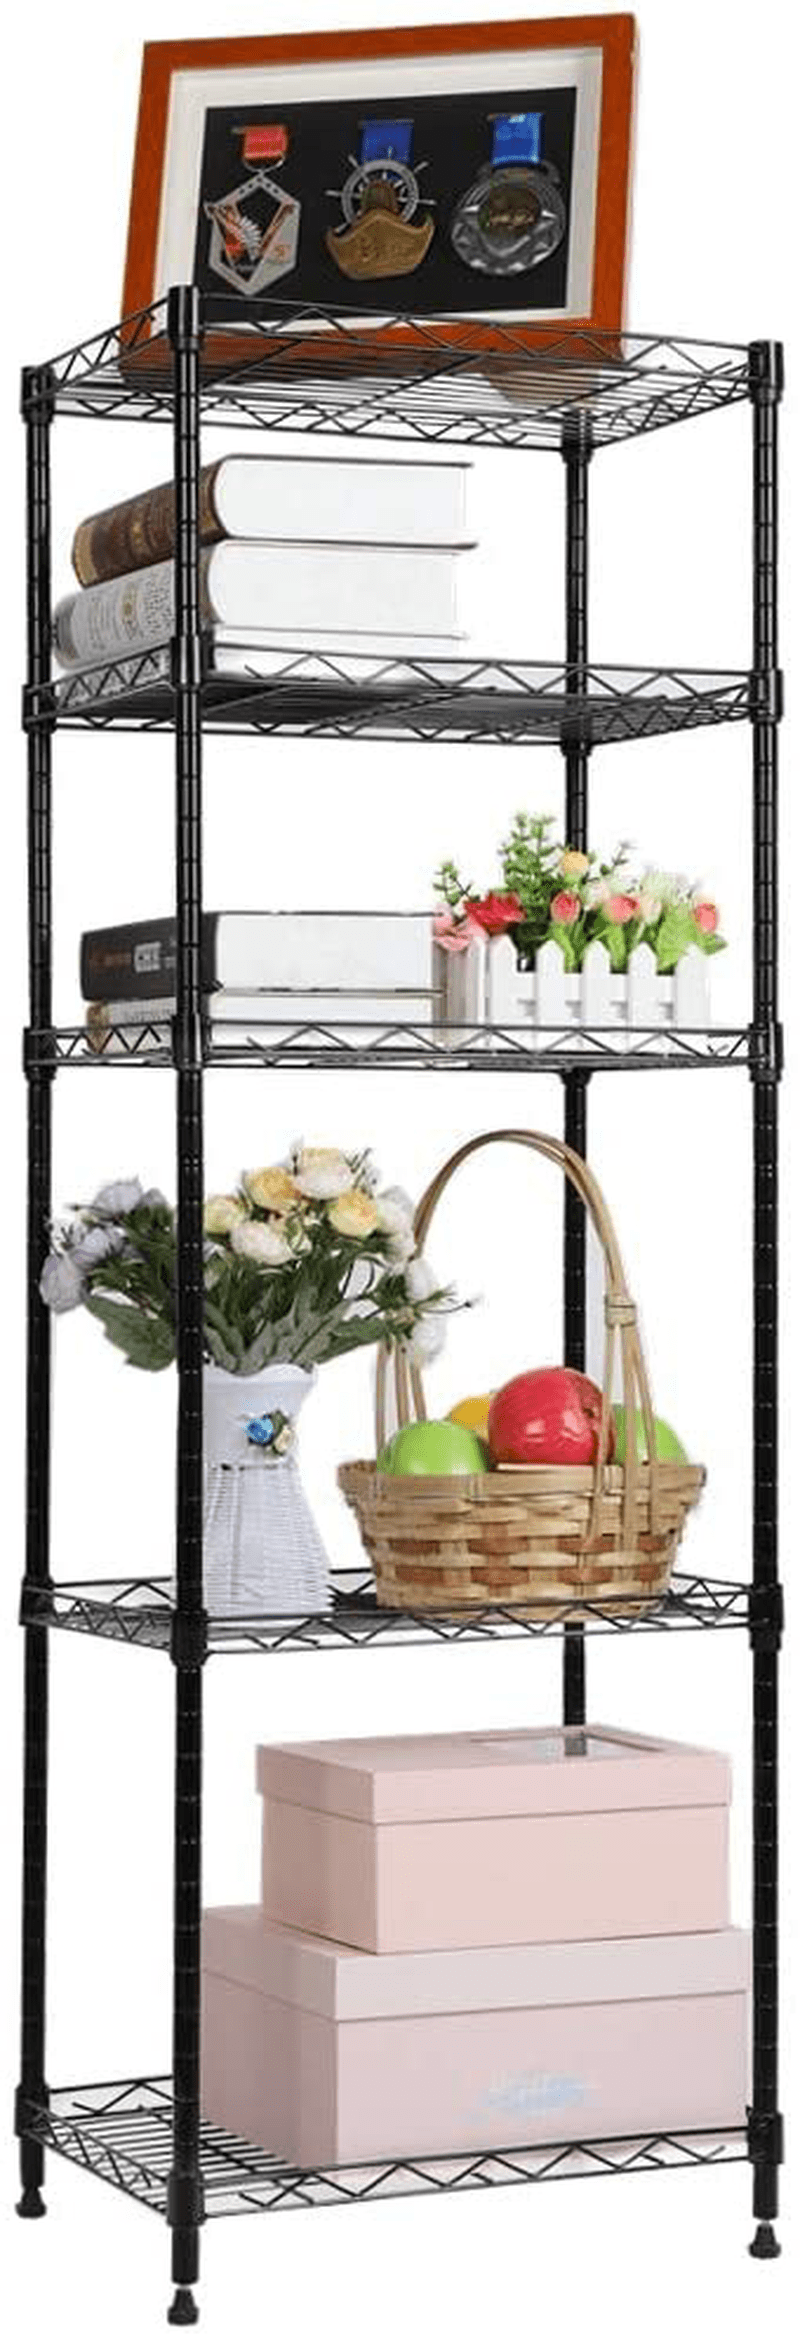 YOHKOH 5-Wire Shelving Metal Storage Rack Adjustable Shelves for Laundry Bathroom Kitchen Pantry Closet (Black) (16.6L X 11.8W X 48H, Black) Home & Garden > Kitchen & Dining > Food Storage YOHKOH   